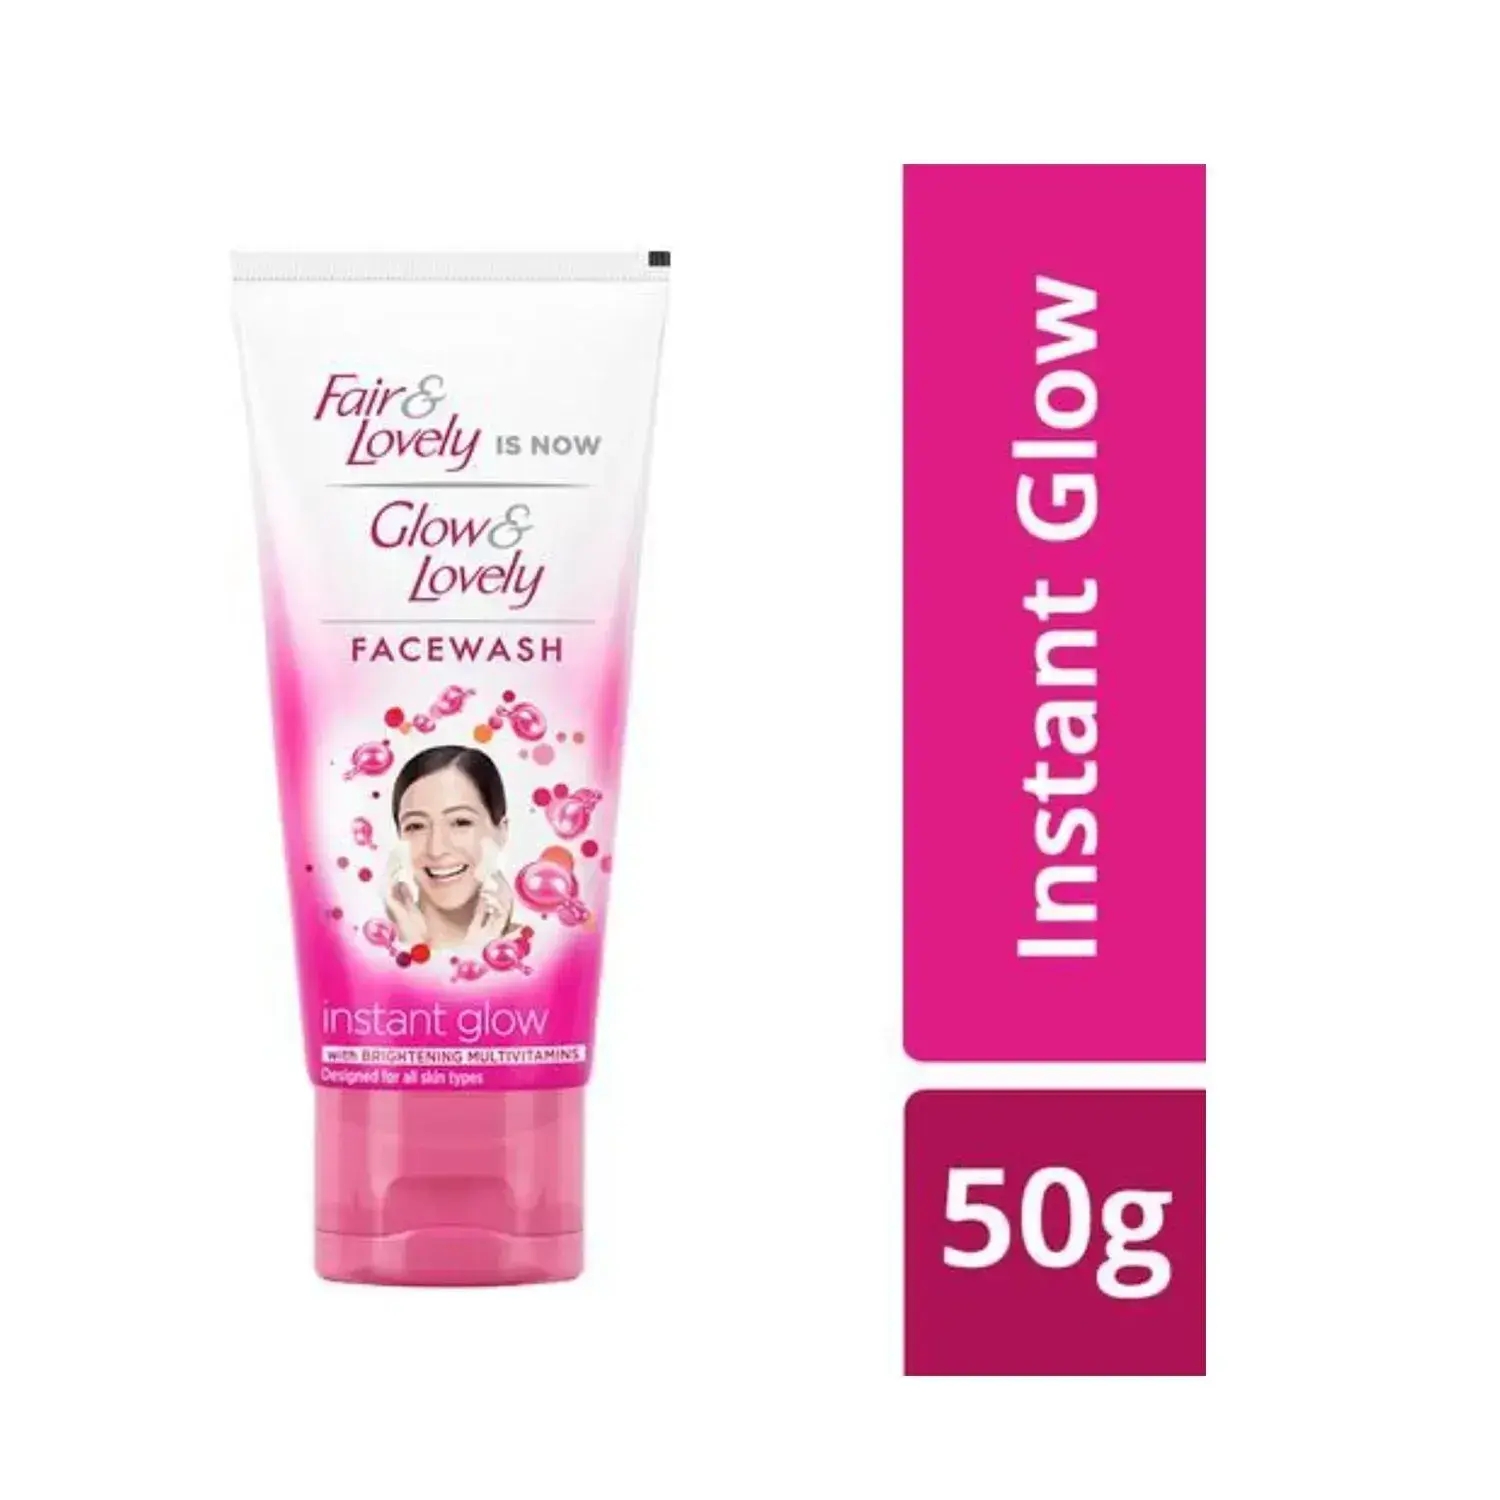 Glow & Lovely | Glow & Lovely Instant Glow Facewash (50g)